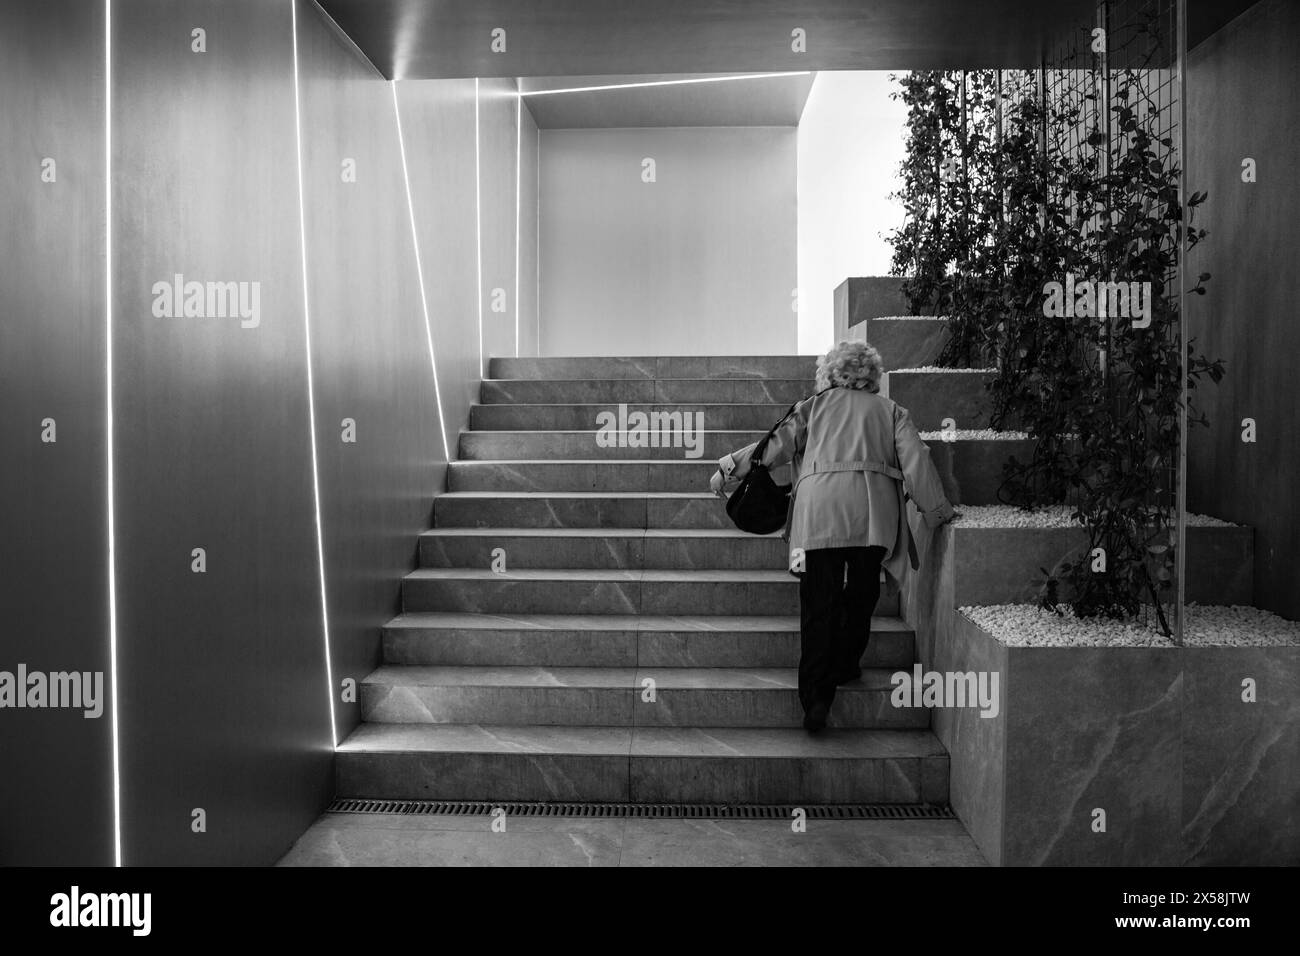 Elderly woman climbing pedestrian underpass stairs Stock Photo